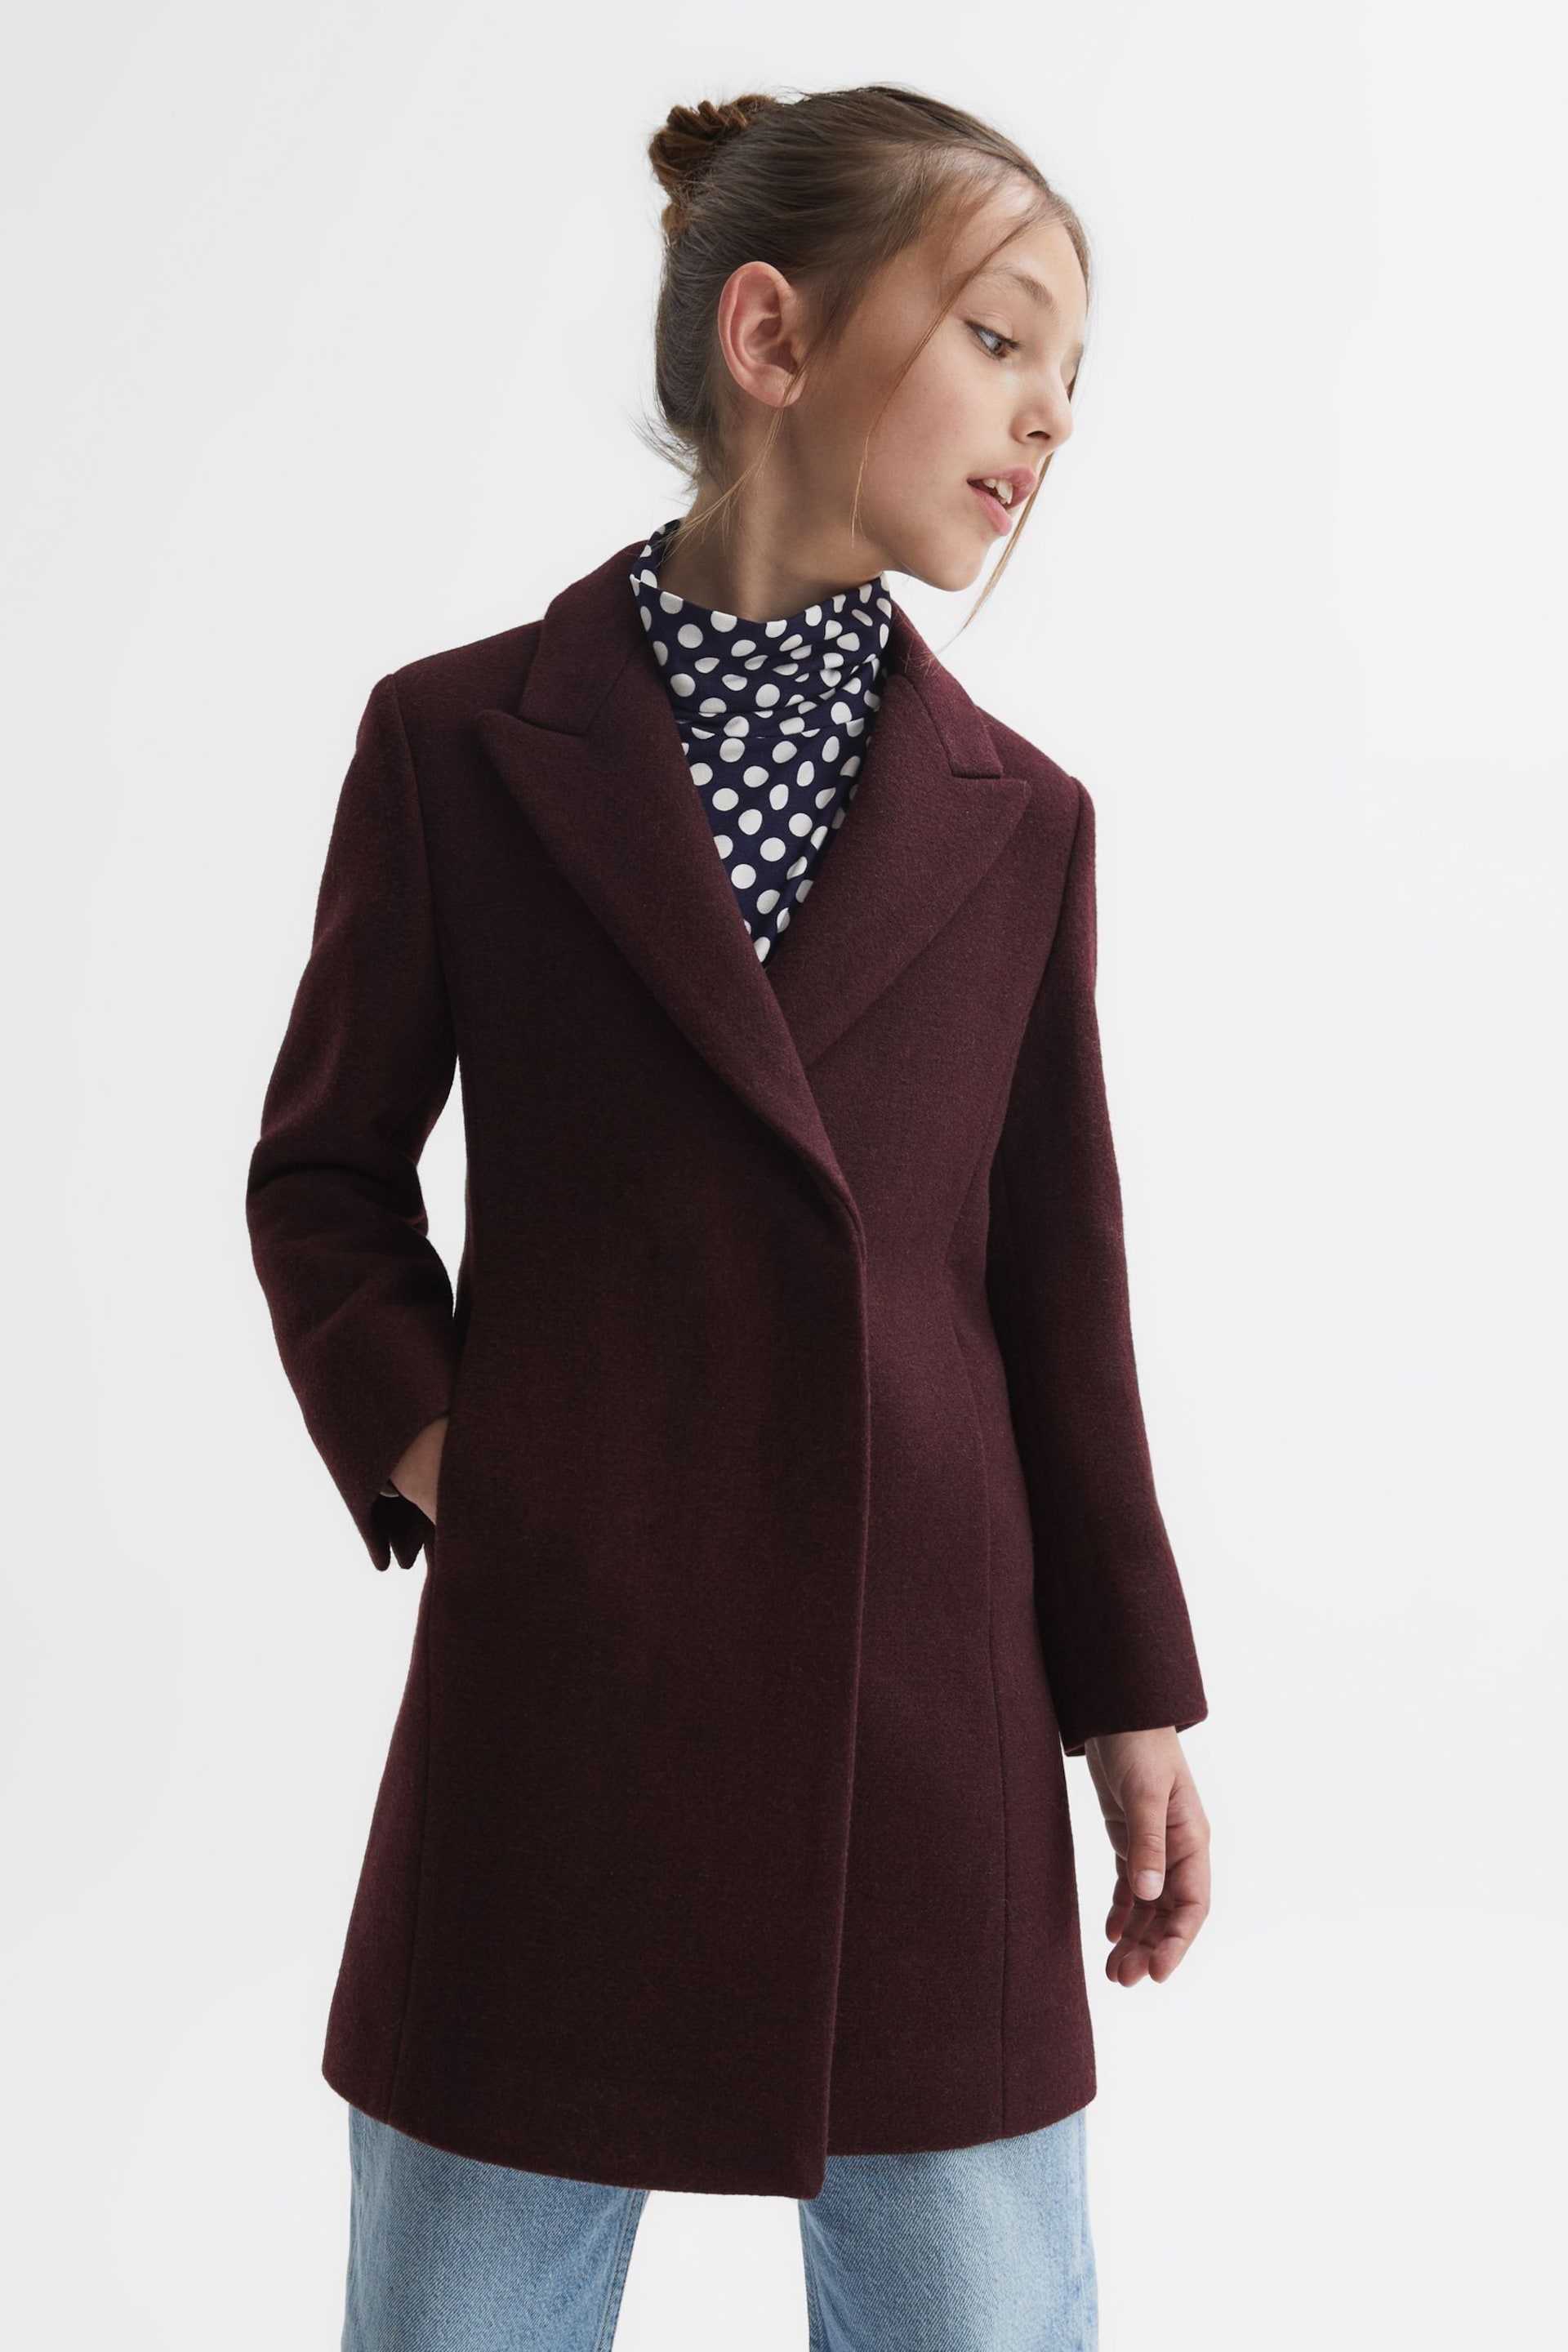 Reiss Berry Harlow Junior Mid Length Wool Blend Coat - Image 3 of 6